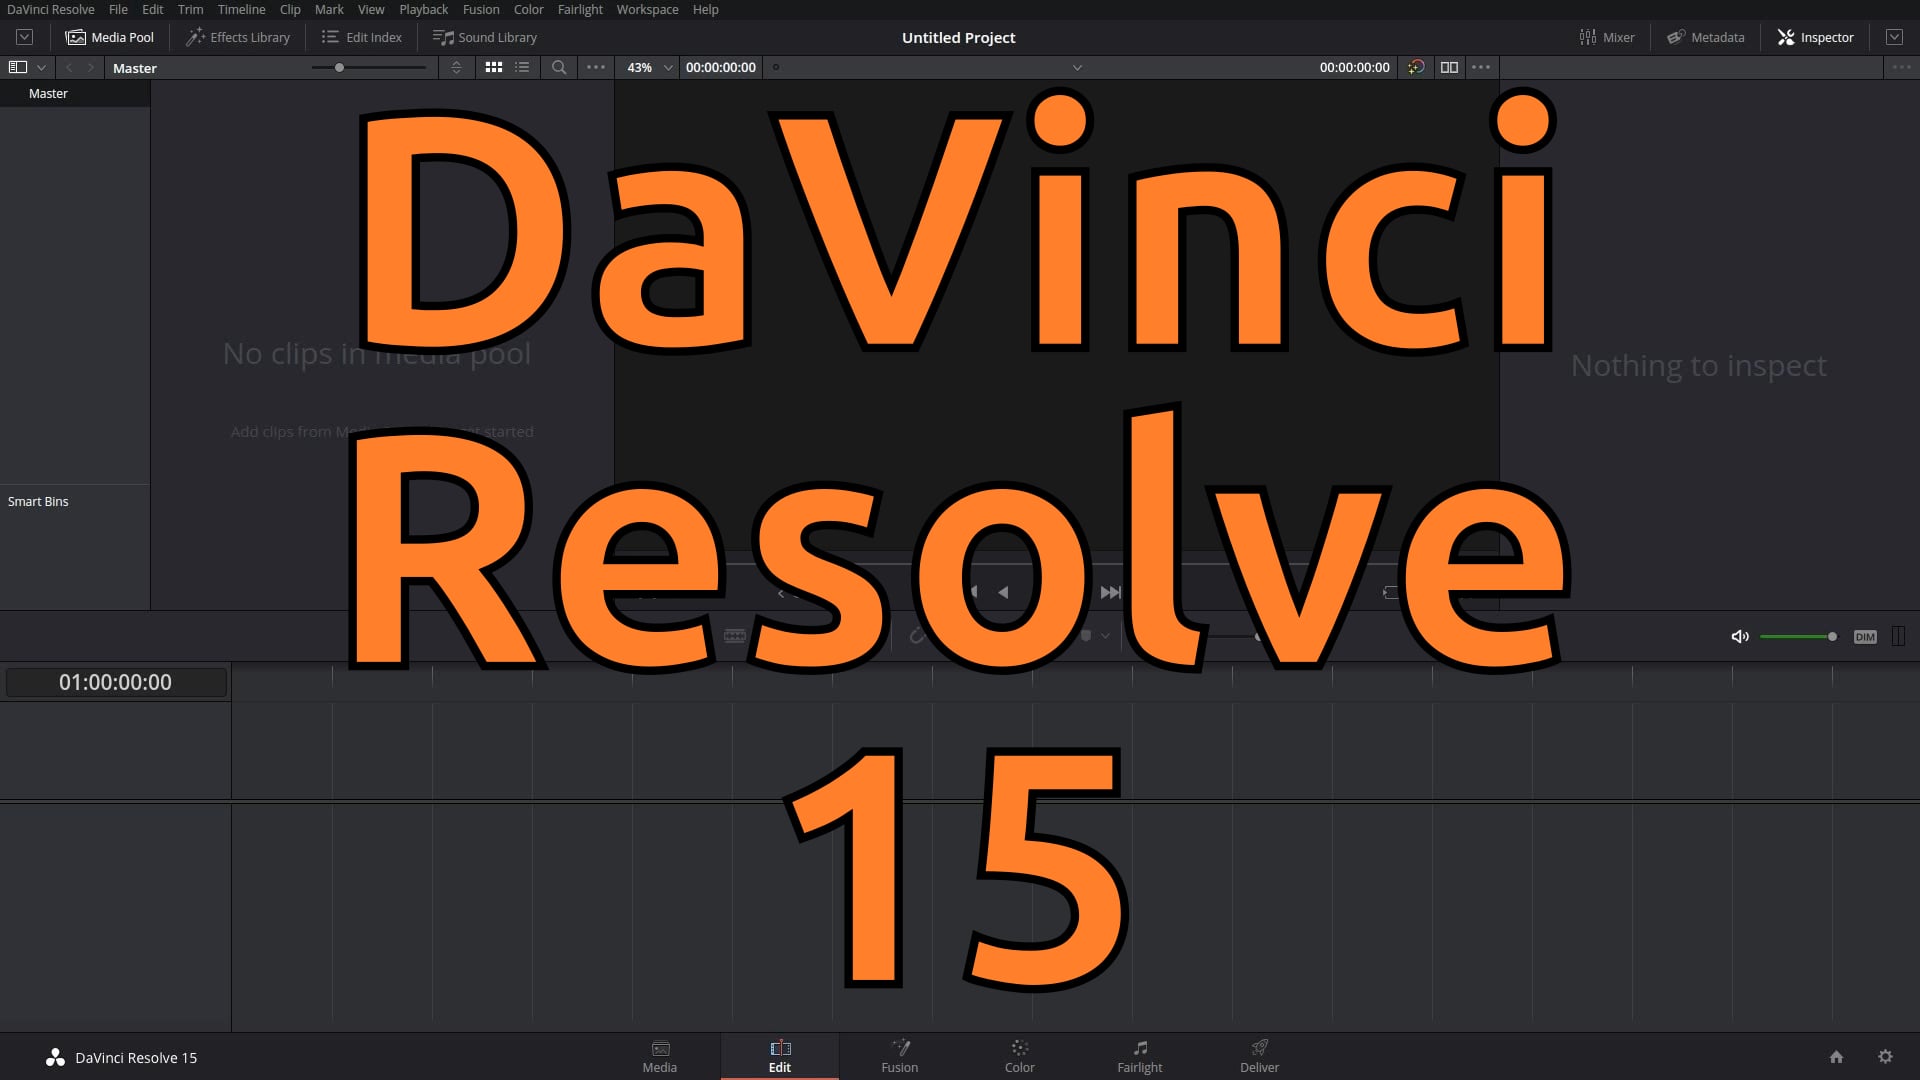 DaVinci Resolve 15 on Linux